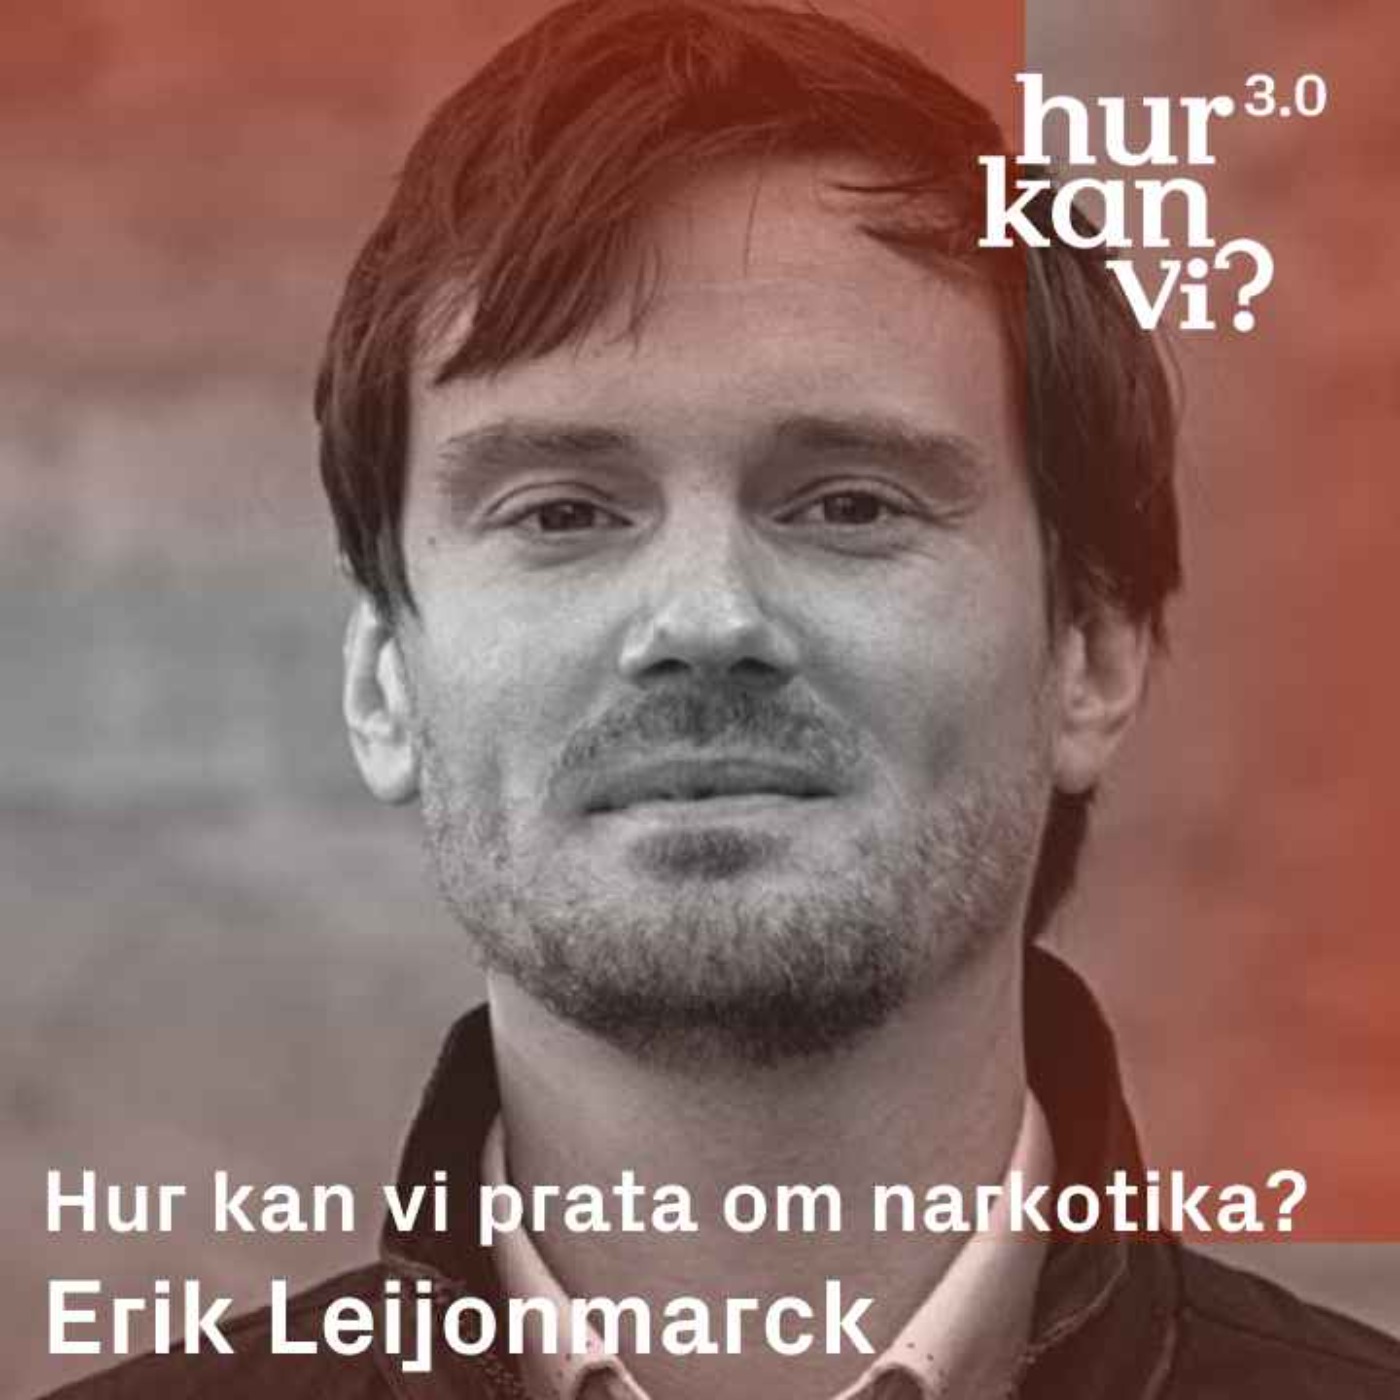 Erik Leijonmarck - Hur kan vi prata om narkotika? Q & A